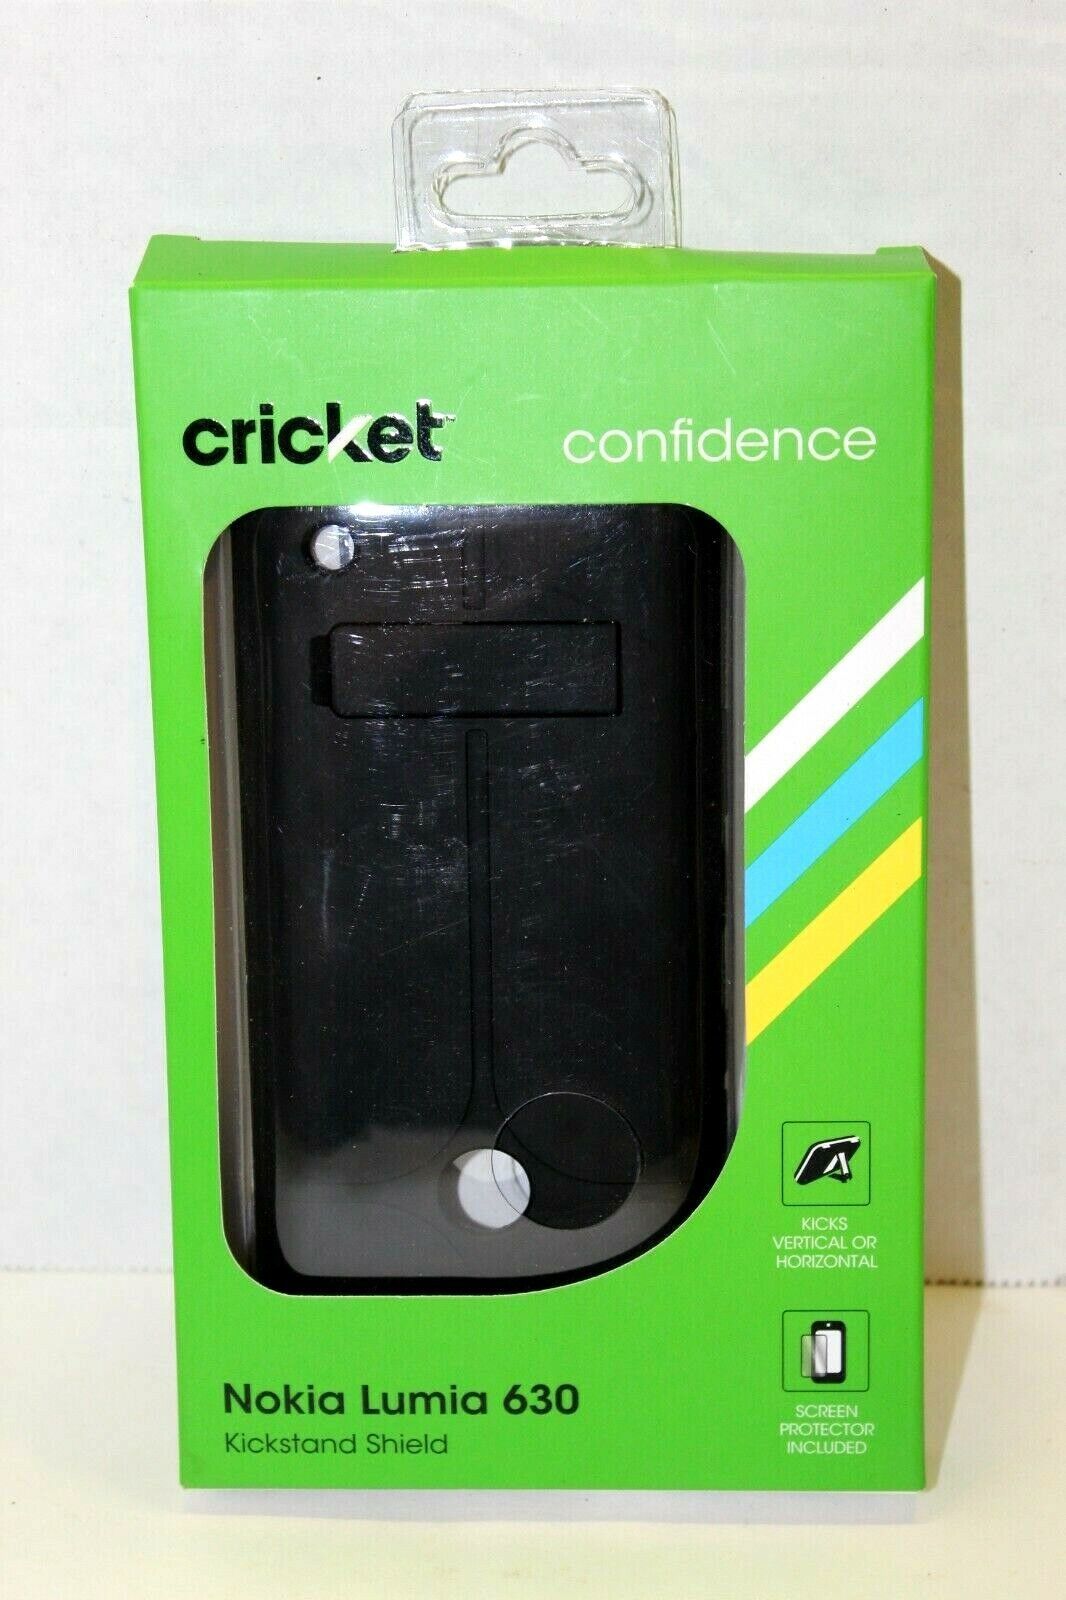 Cricket Nokia Lumia 630 Matte Black Kickstand Shield Case & Screen Protector  - $9.90